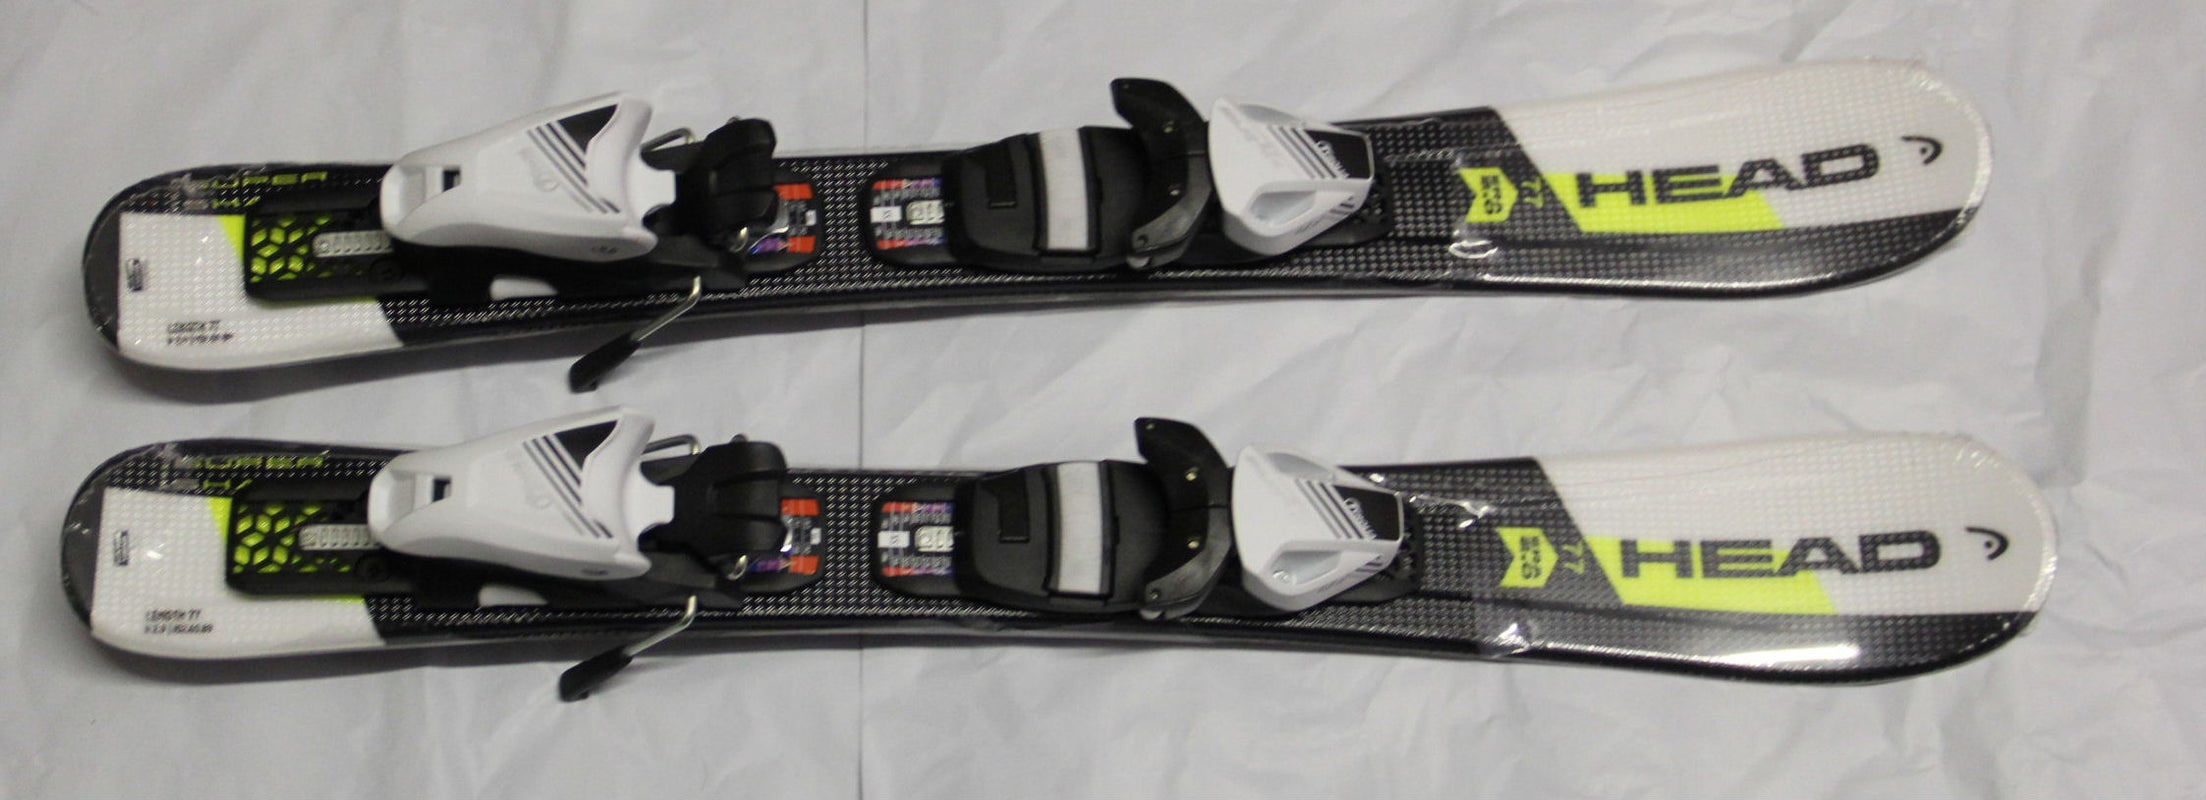 NEW HEAD kids skis Supershape kids Skis 77cm + size adjustable bindings  set NEW